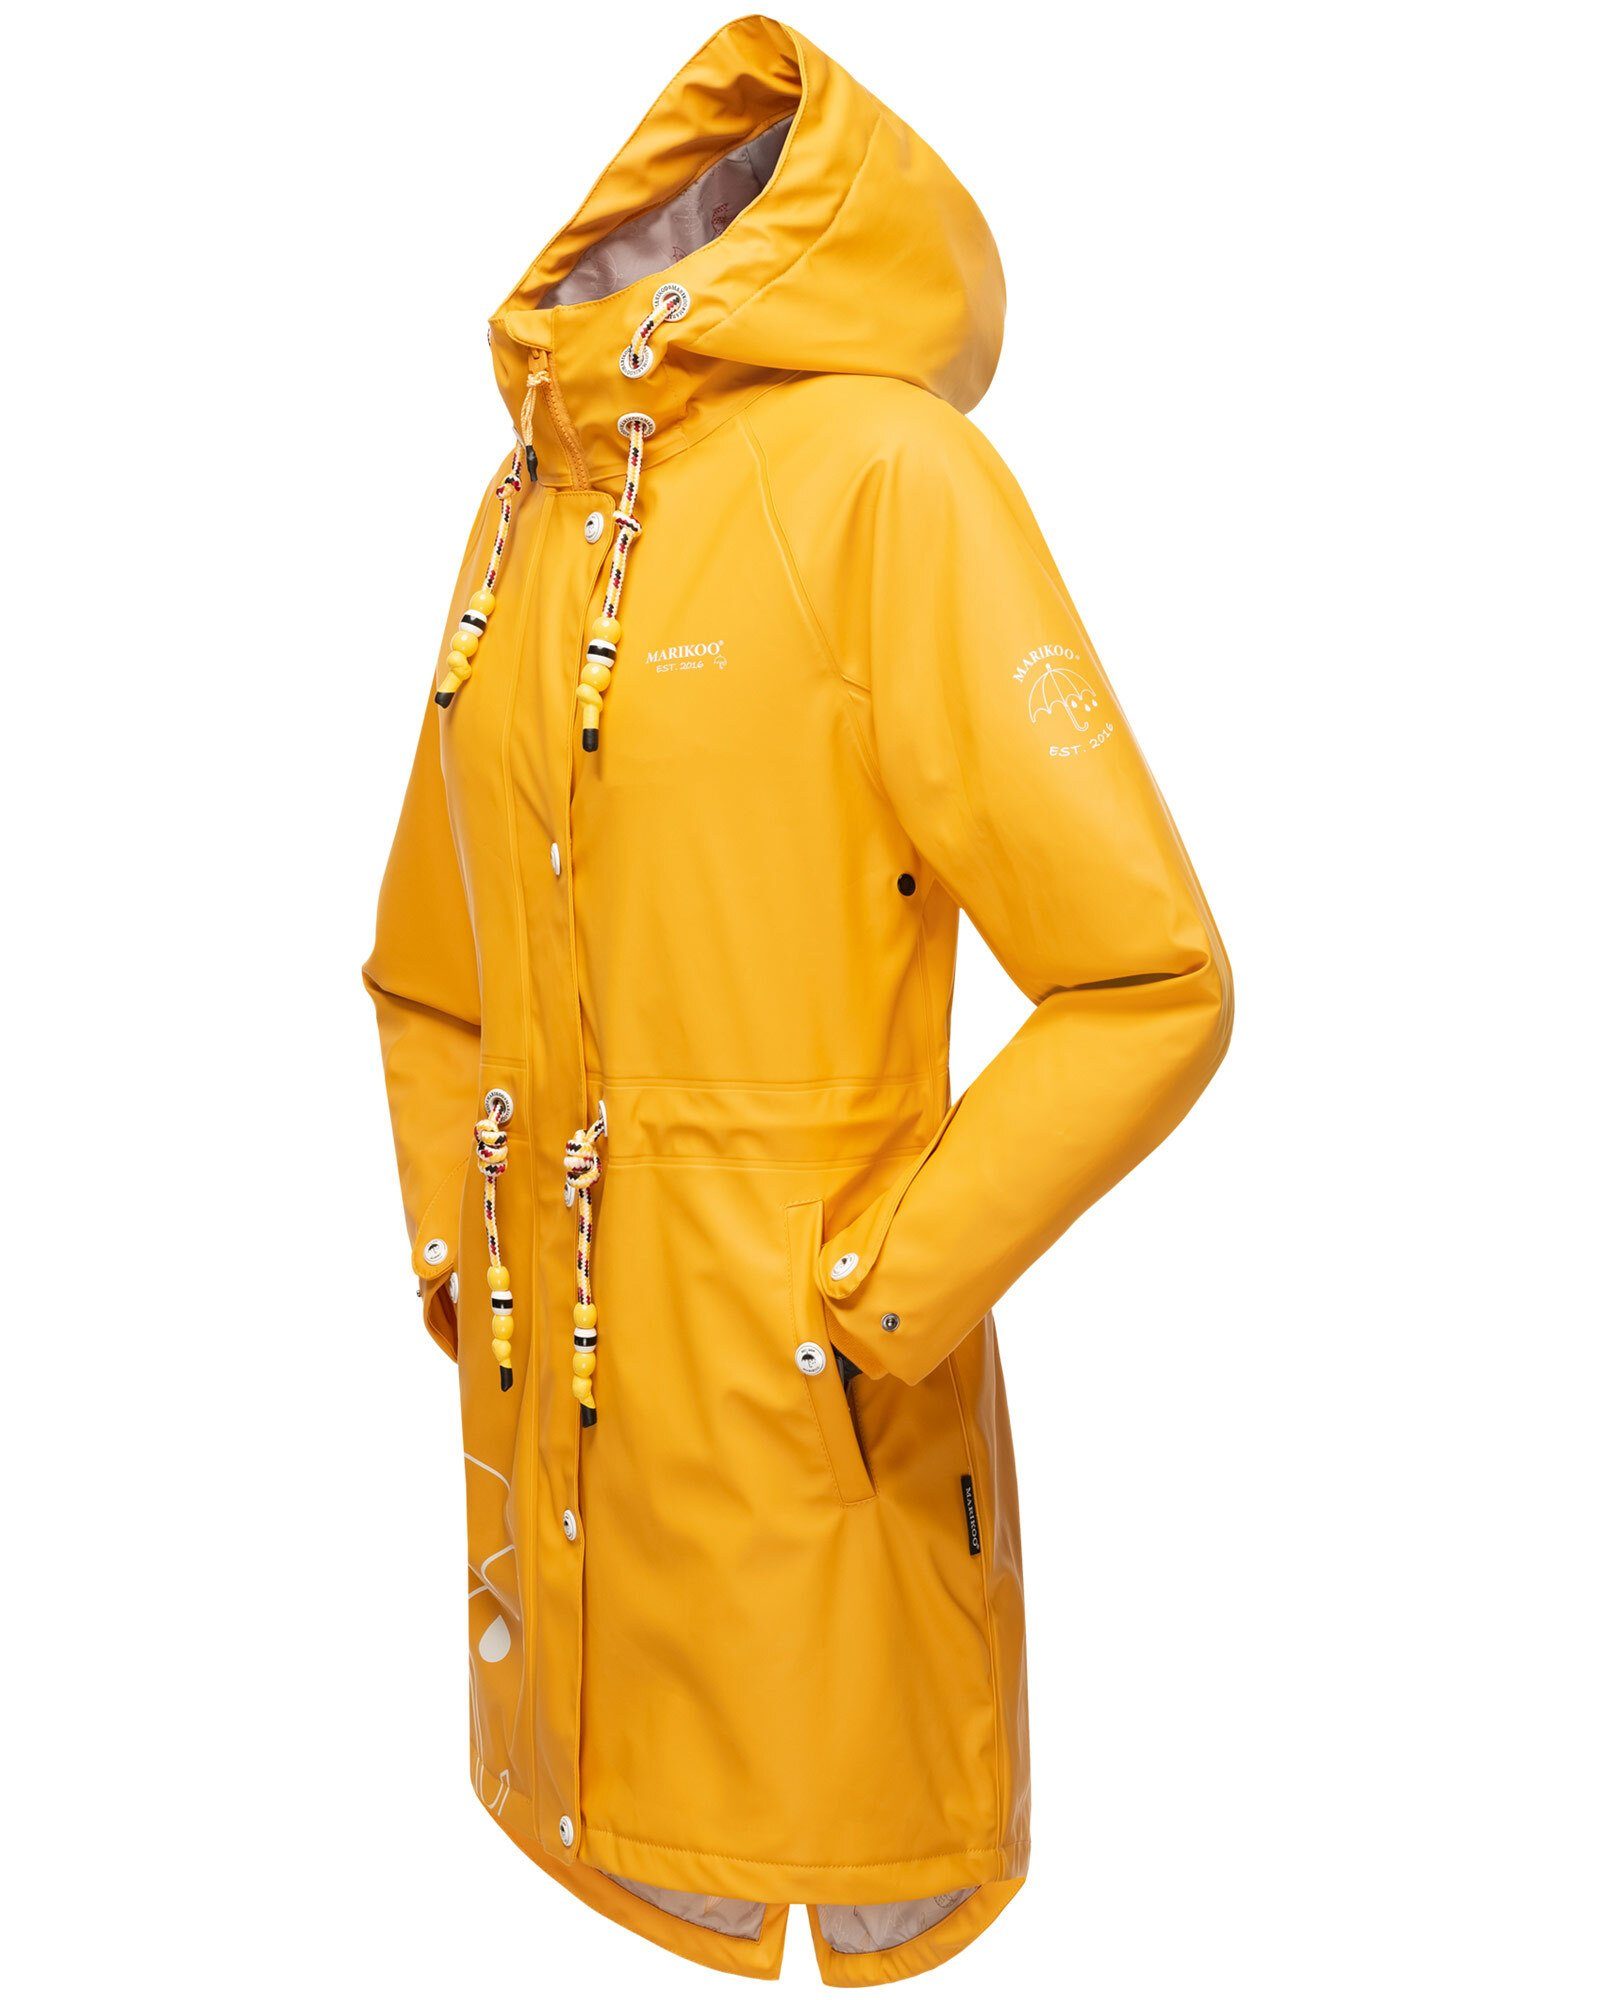 Marikoo Outdoorjacke Dancing mit Umbrella Kapuze Amber Yellow großen einer